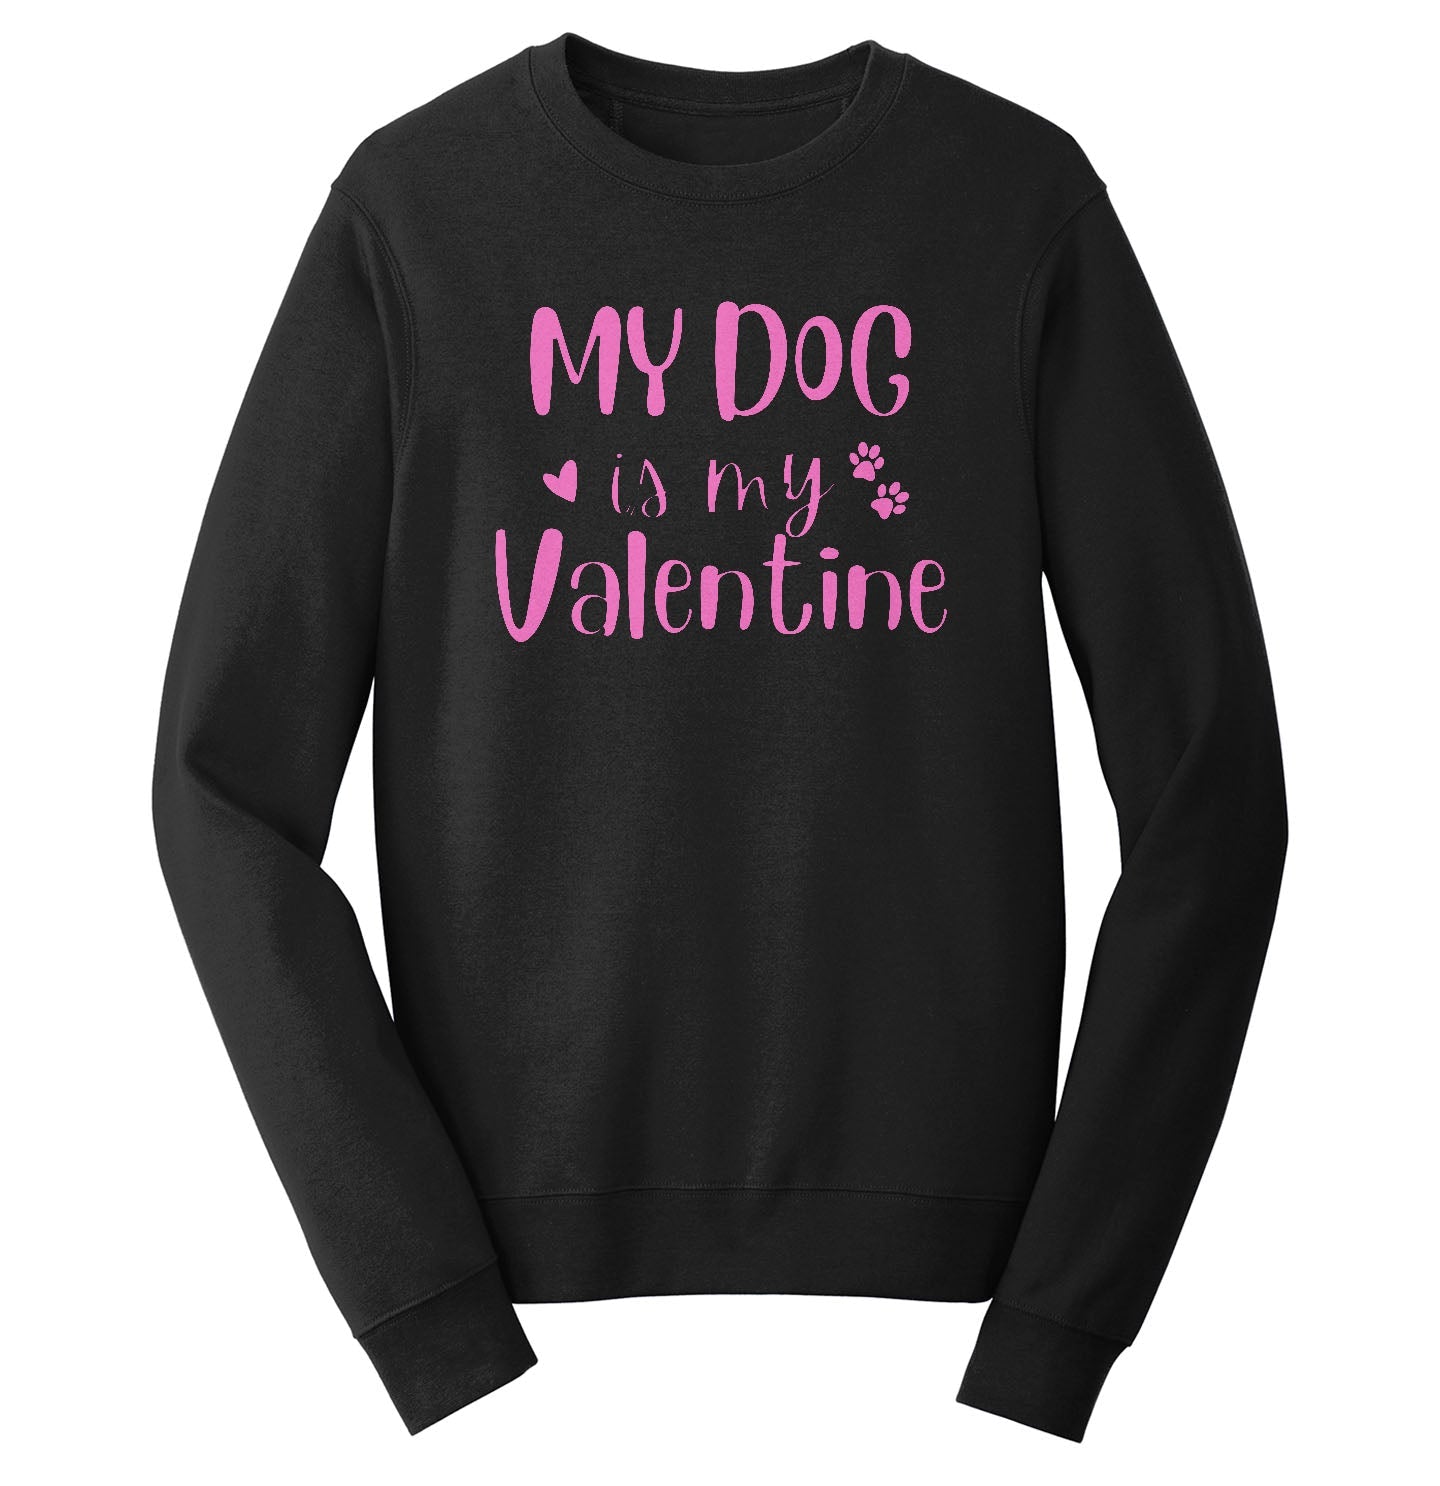 My Dog Valentine - Adult Unisex Crewneck Sweatshirt